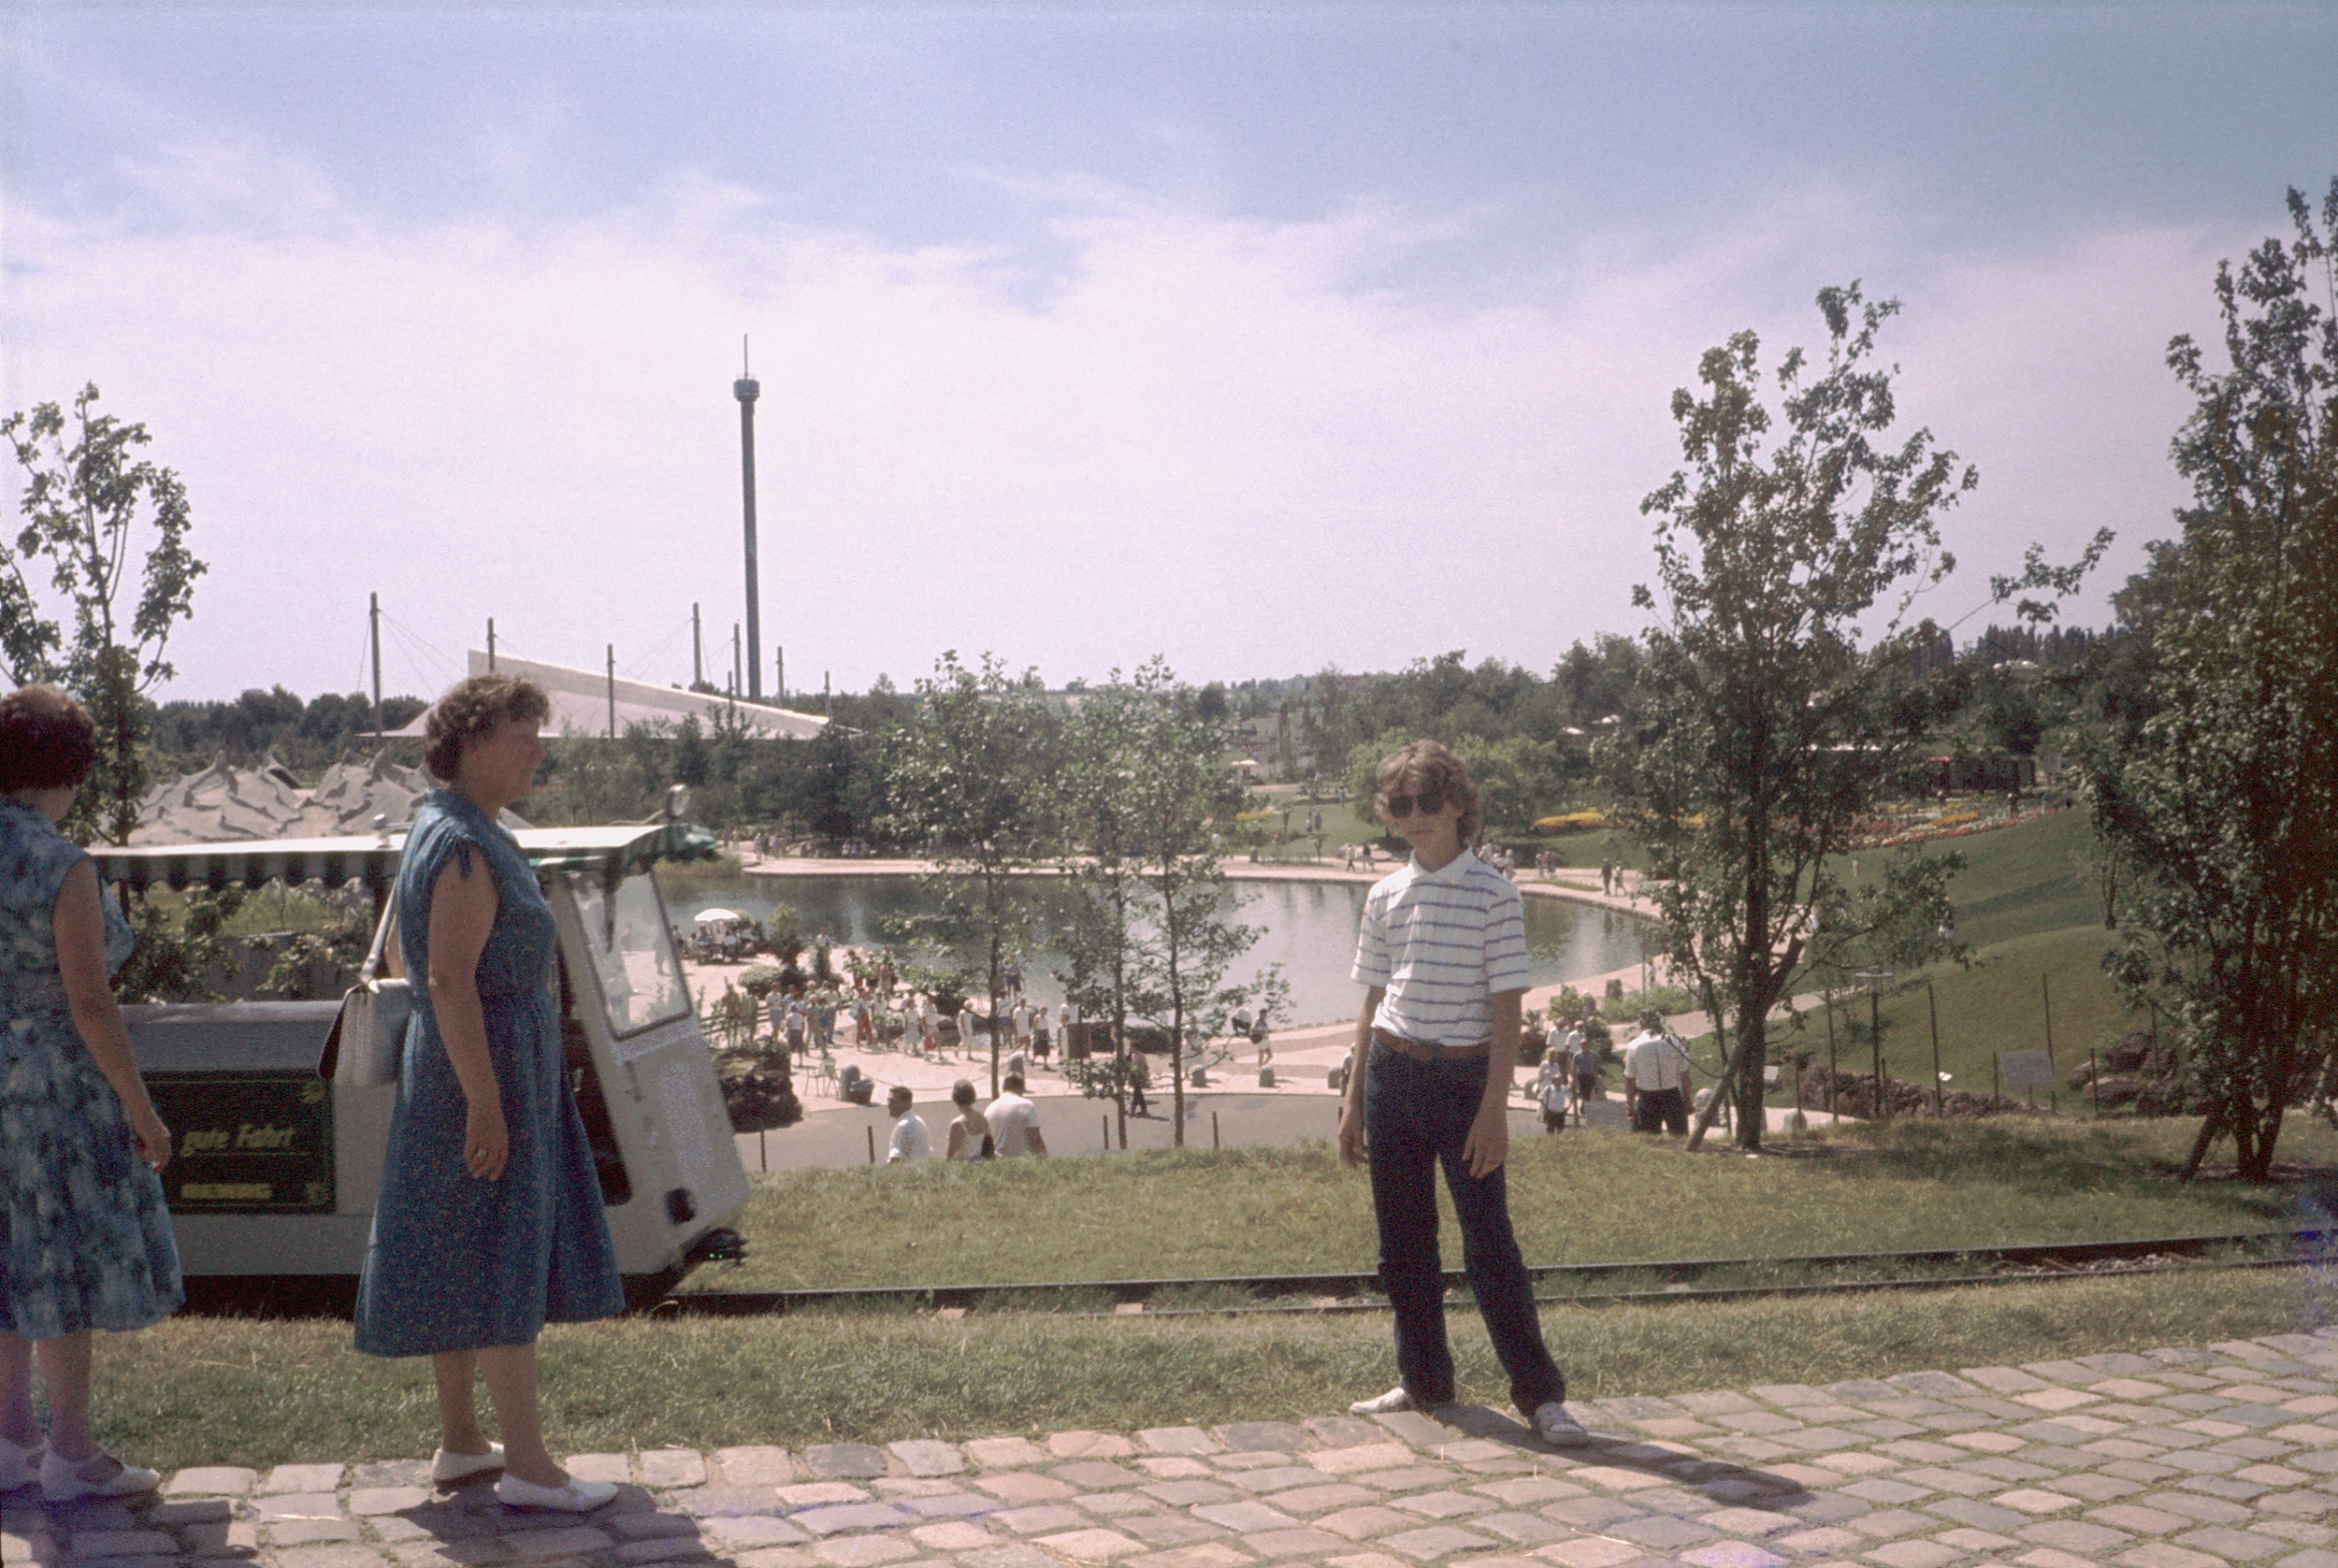 Bundesgartenschau-1985, Blick zum Caf? am See, Restaurantplatz